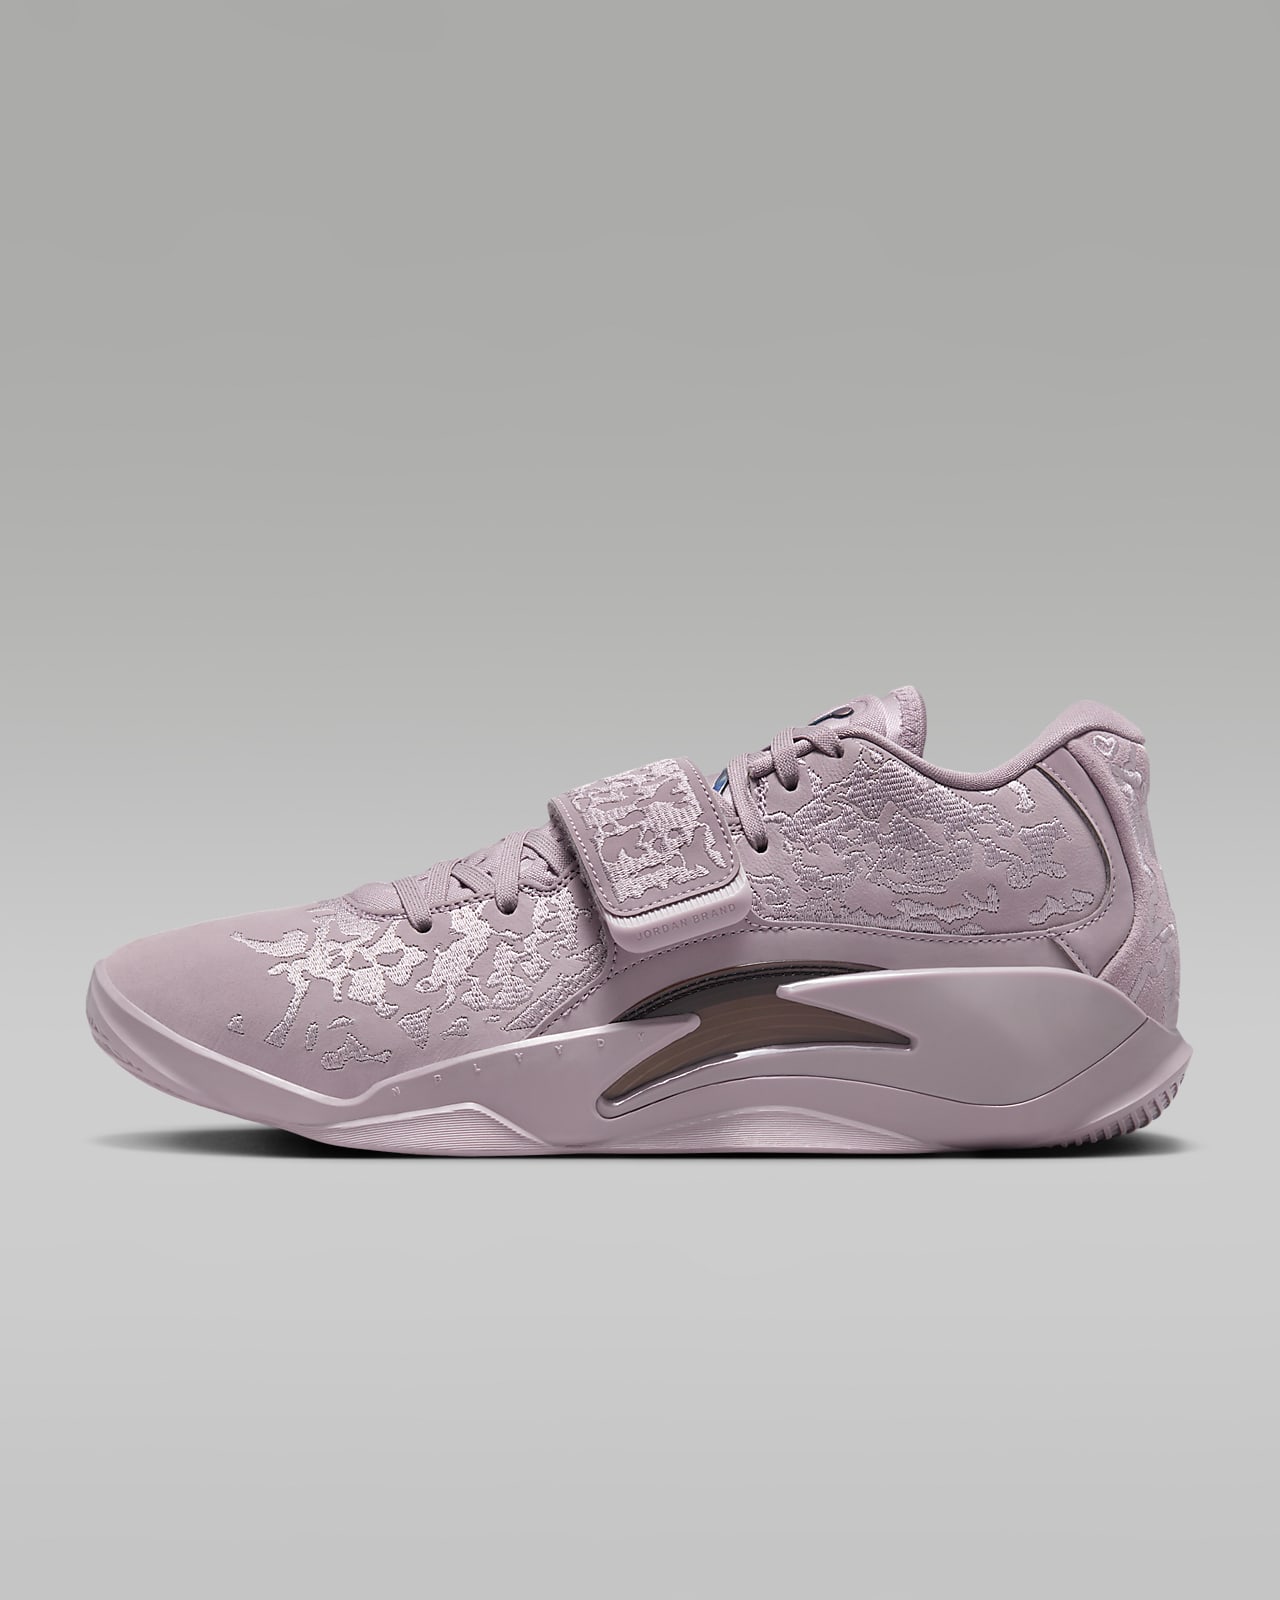 Zion 3 SE PF Basketball Shoes